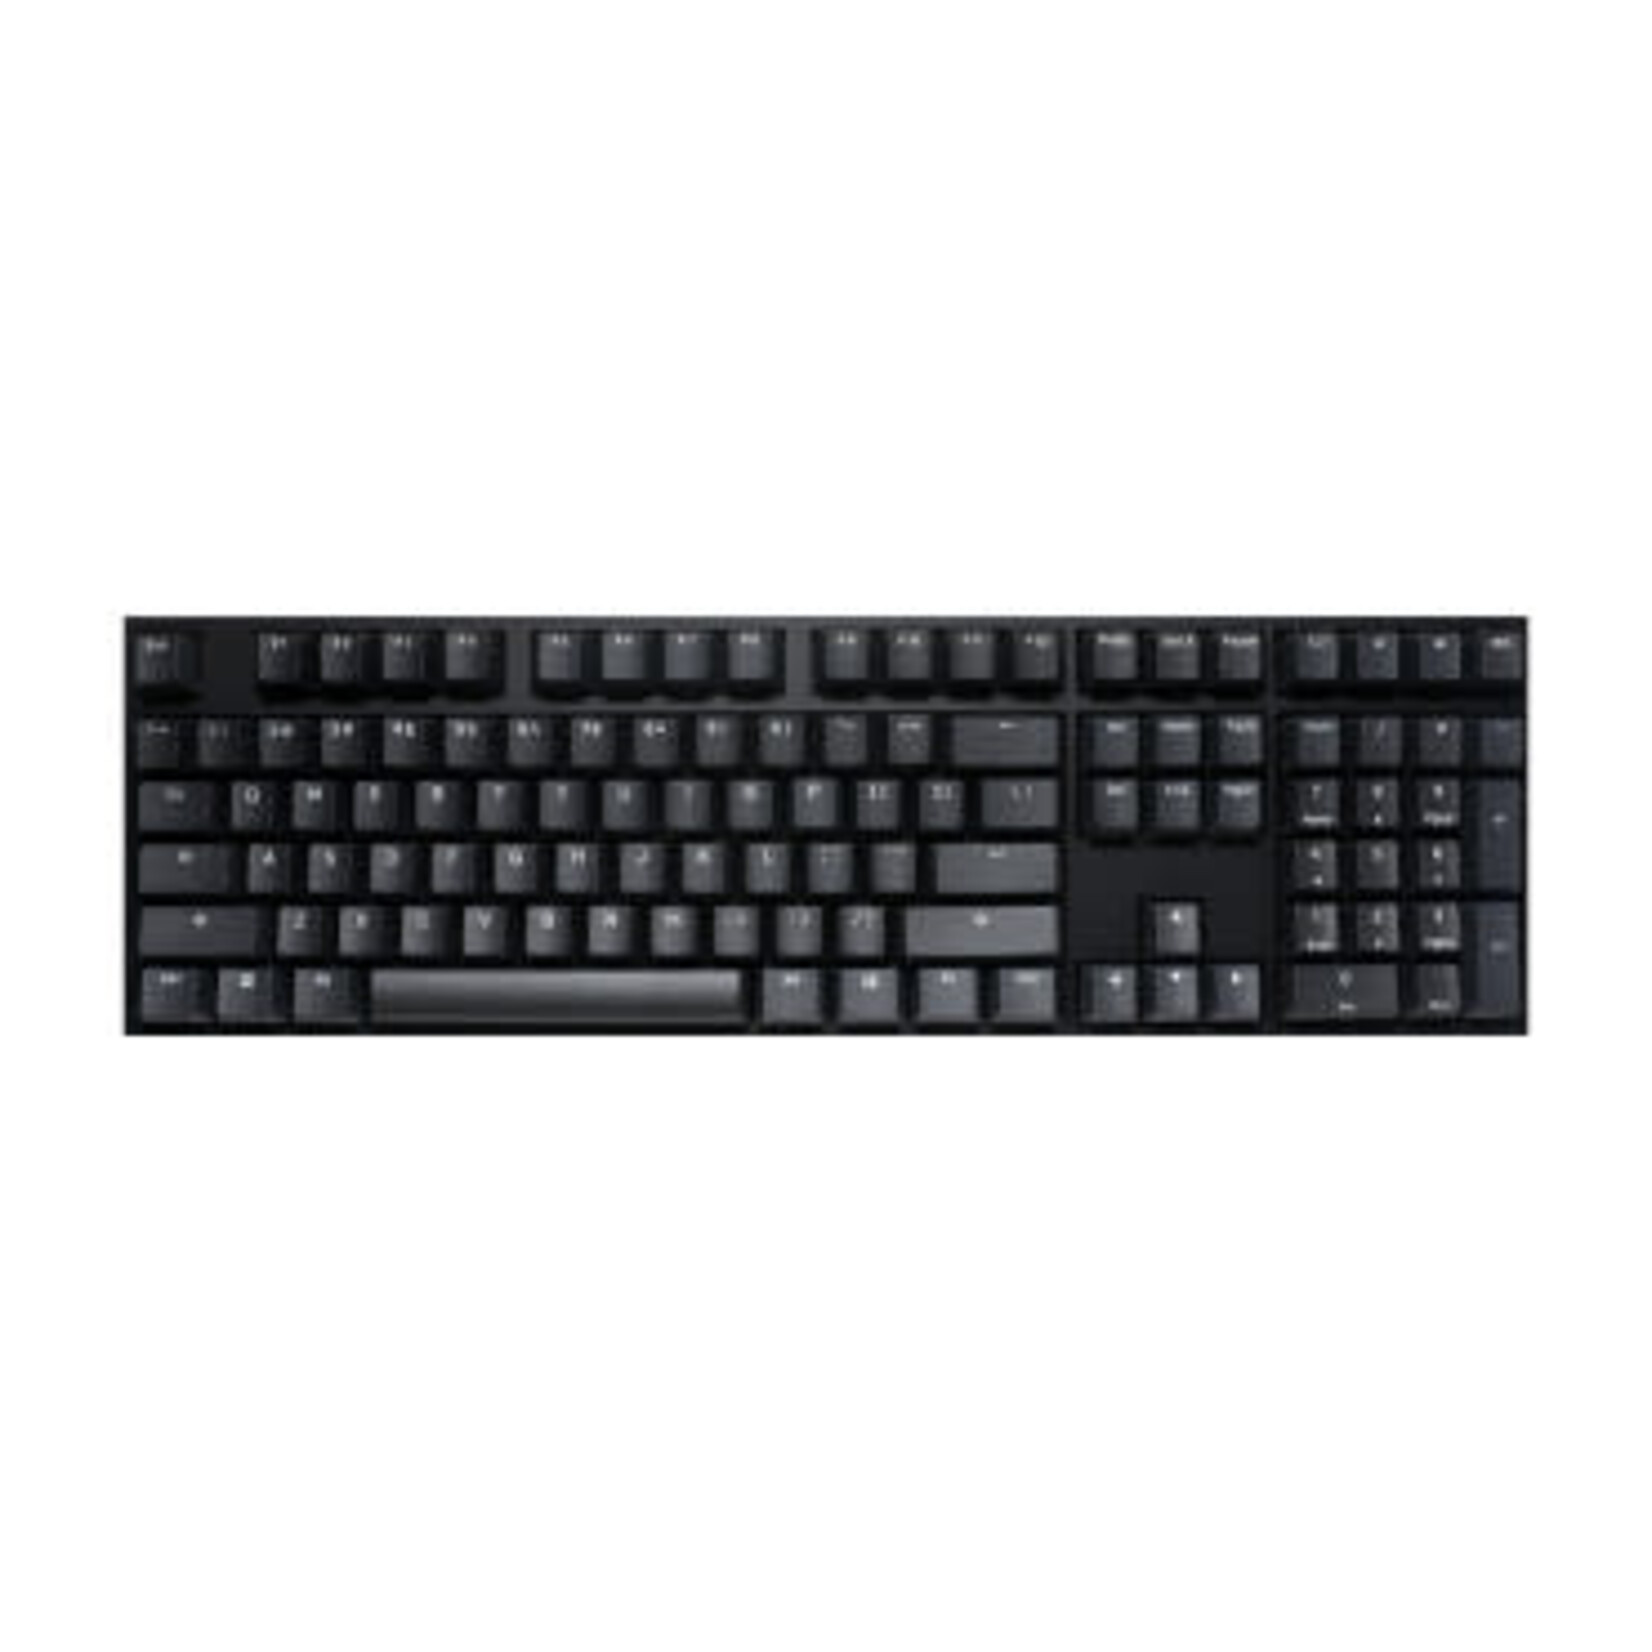 Ducky **Ducky Origin Black Full Size Cherry Brown Keyboard